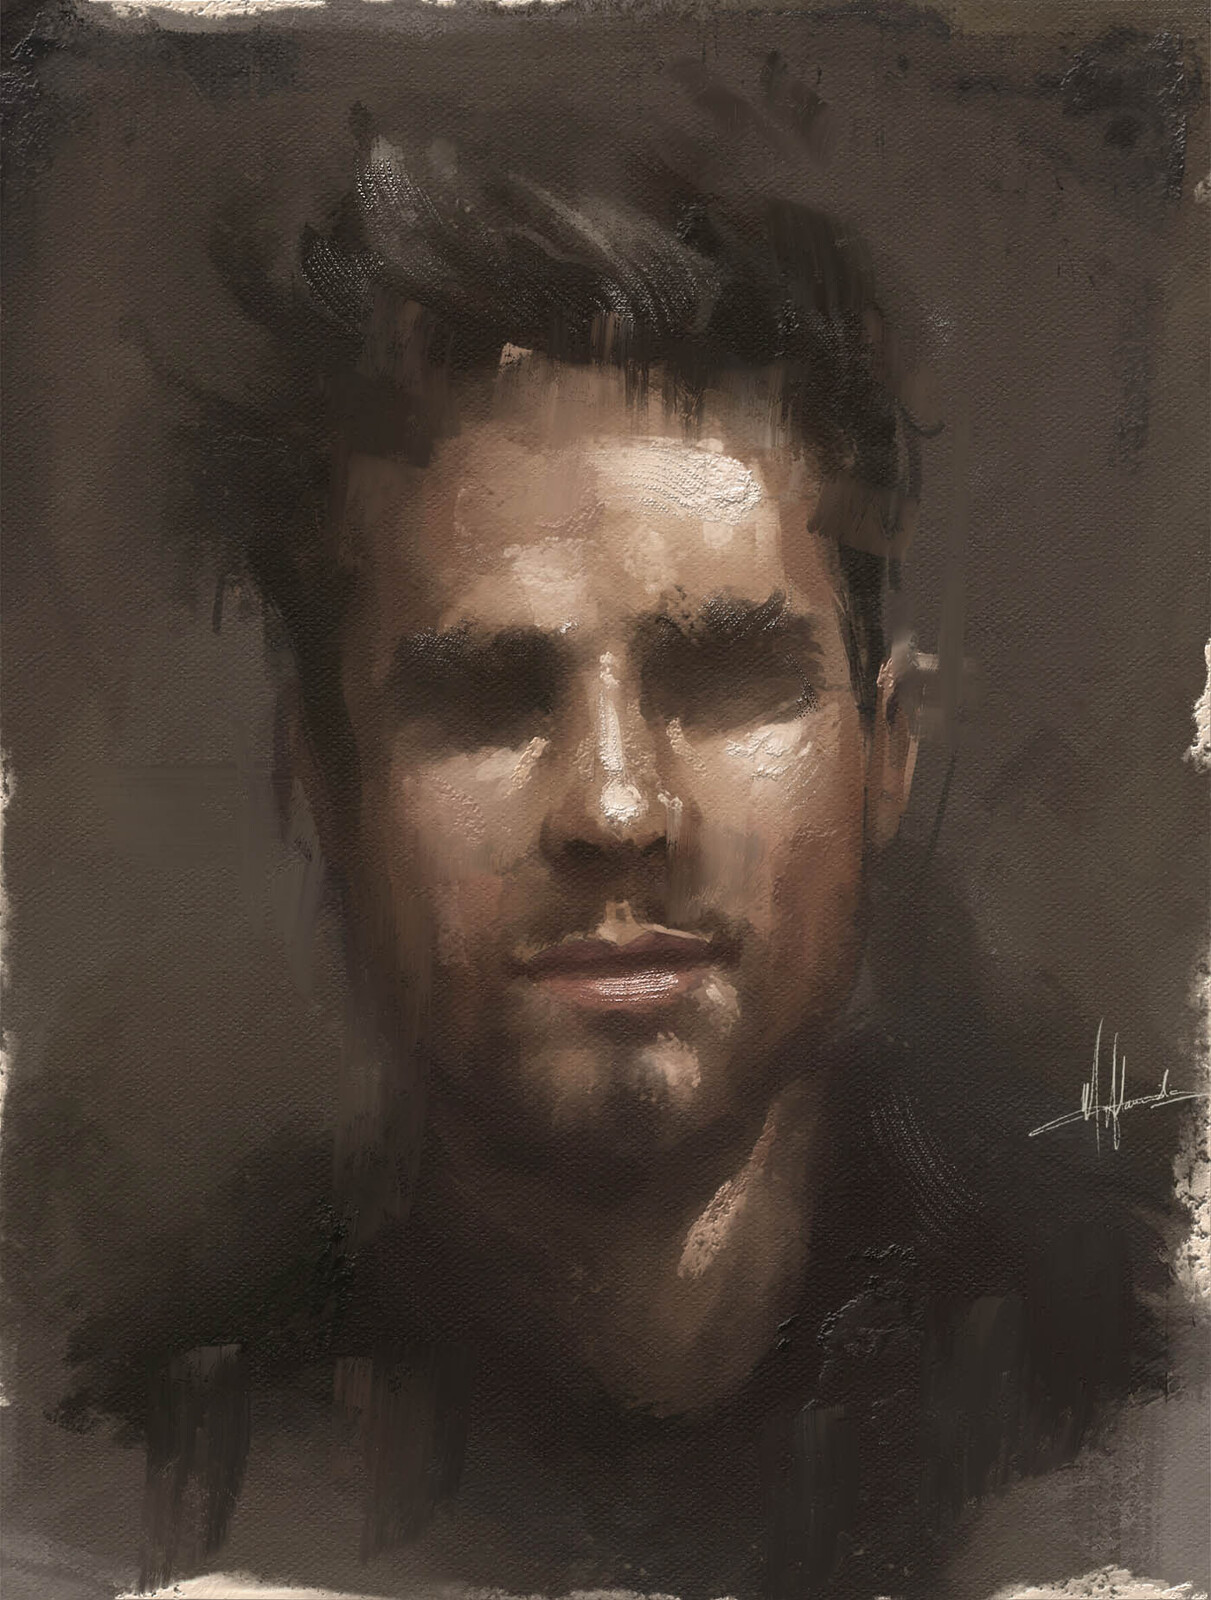 Digital ART Artistic Portrait Painting - Male Head